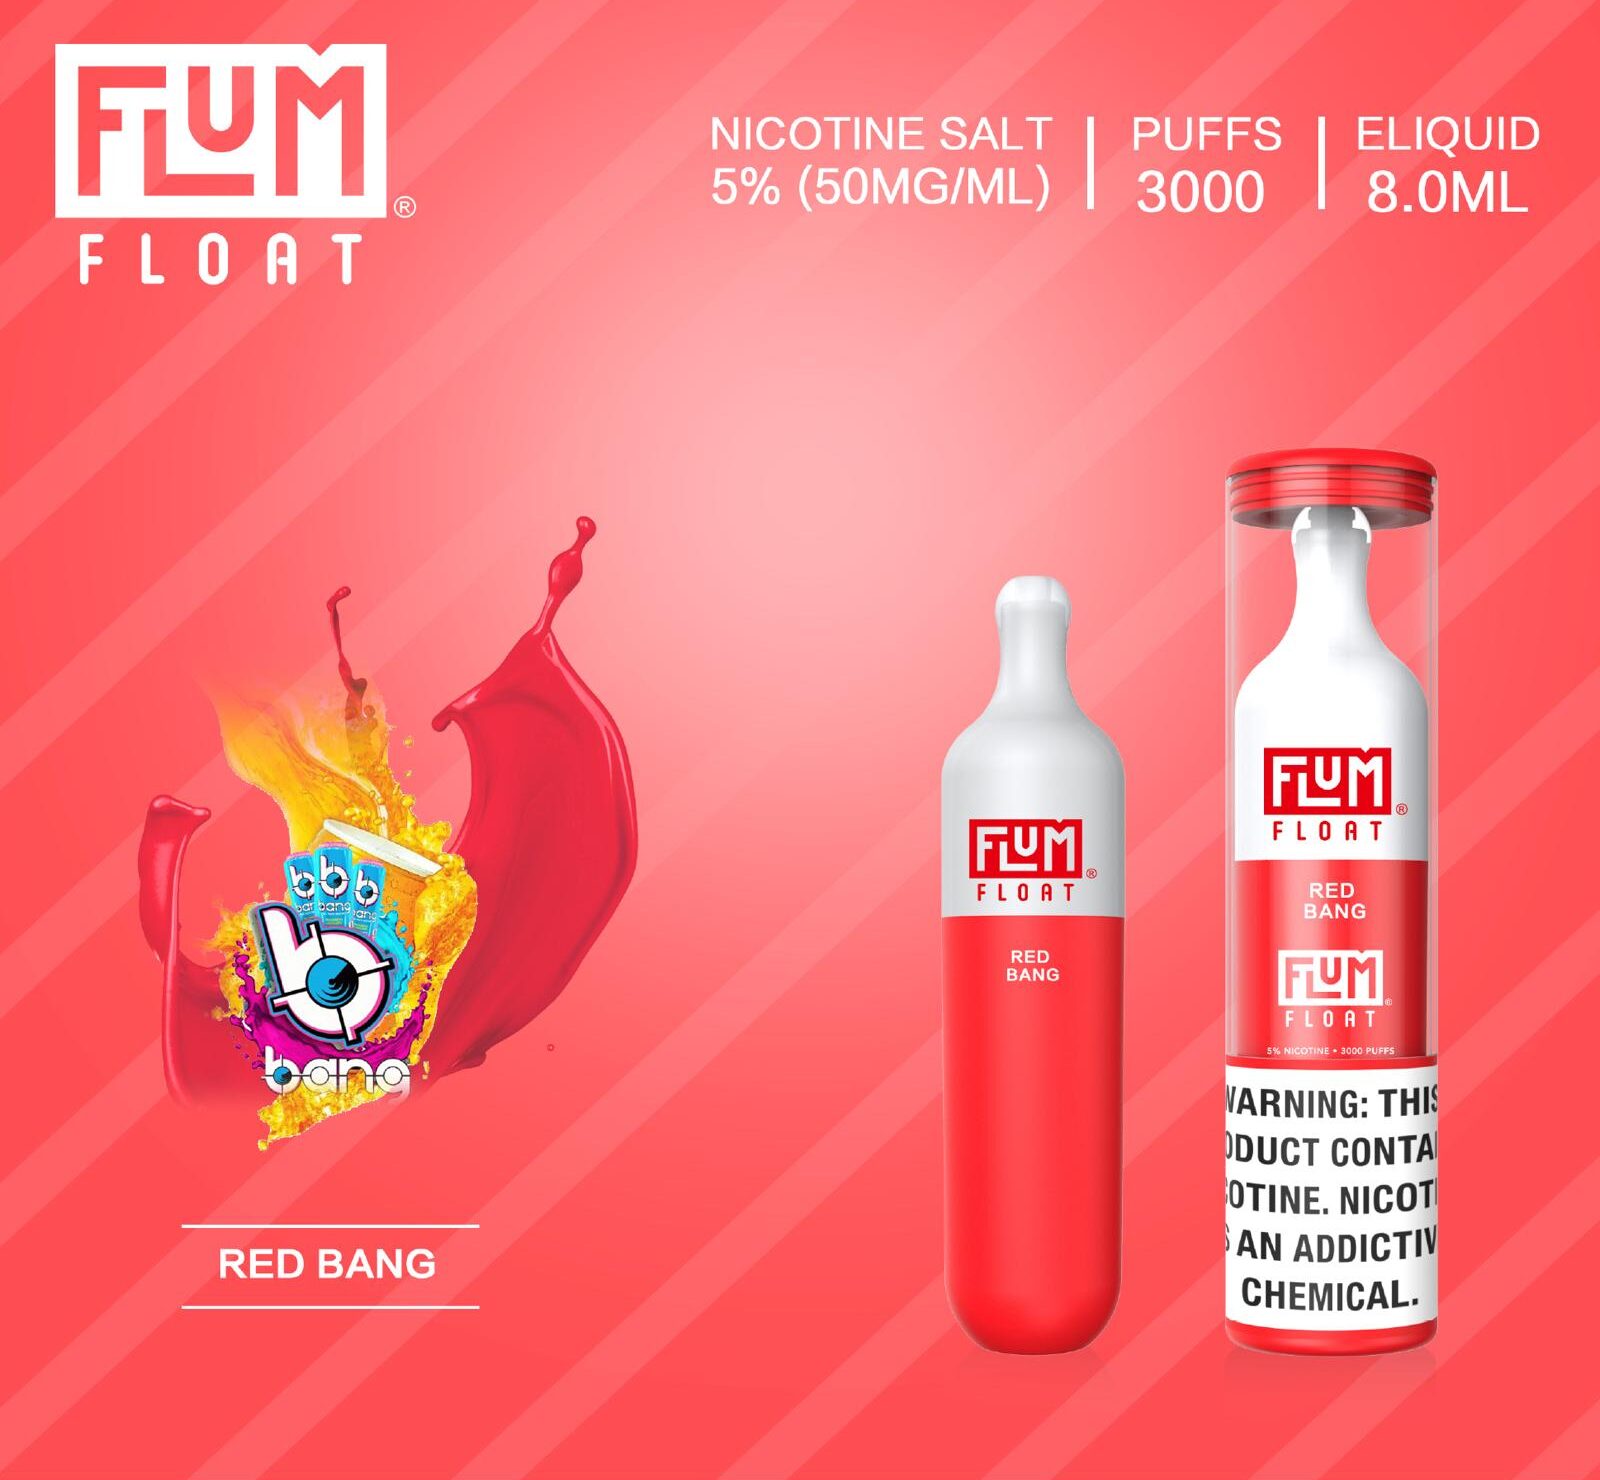 Flum-Float-Red-Bang